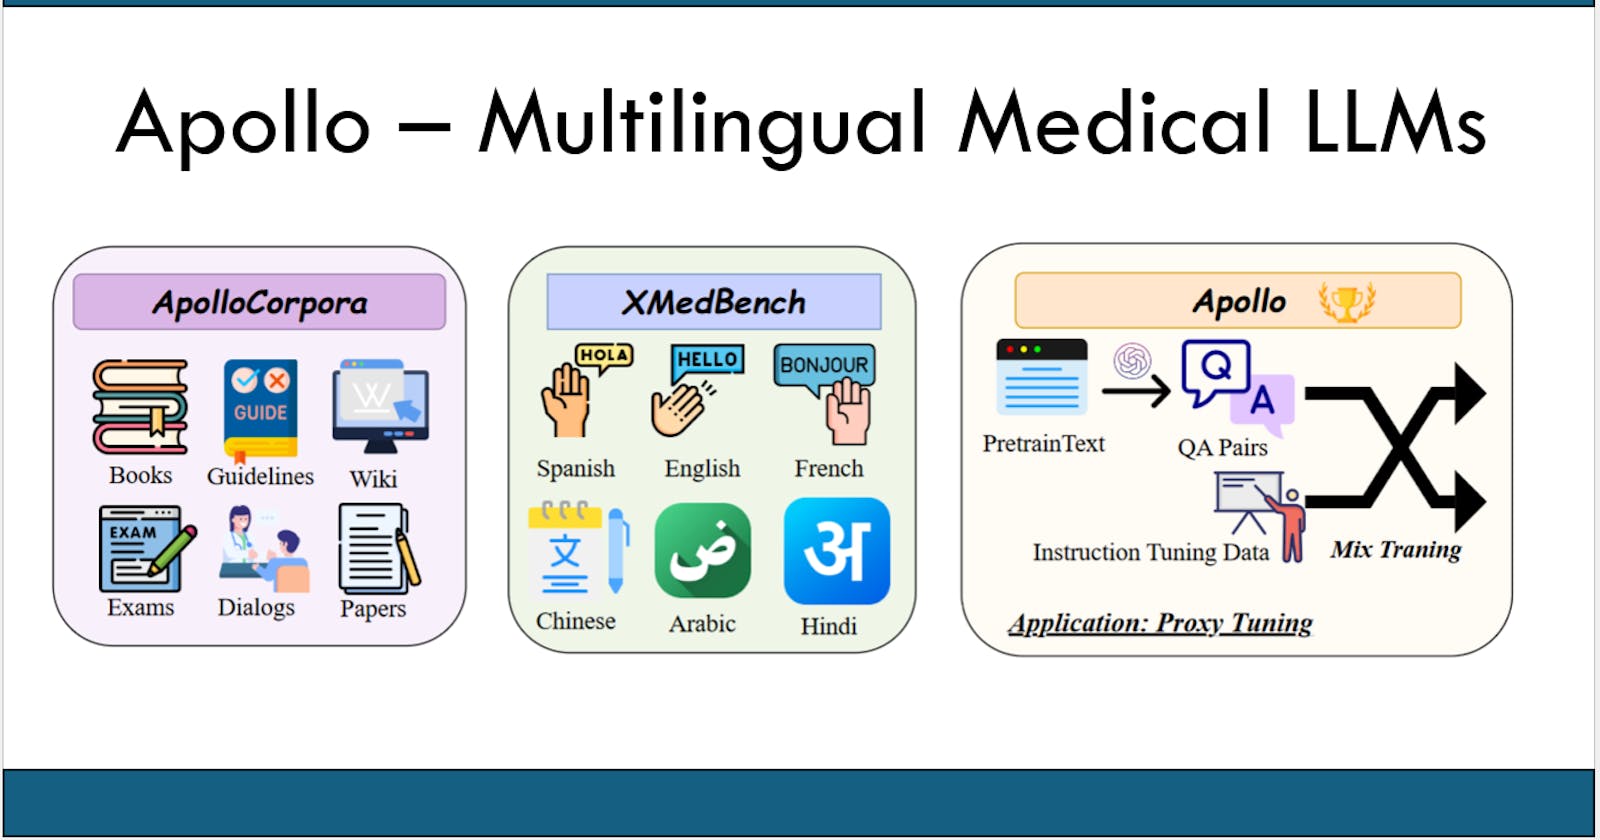 Apollo: Lightweight Multilingual Medical LLMs
towards Democratizing Medical AI to 6B People (short summary)